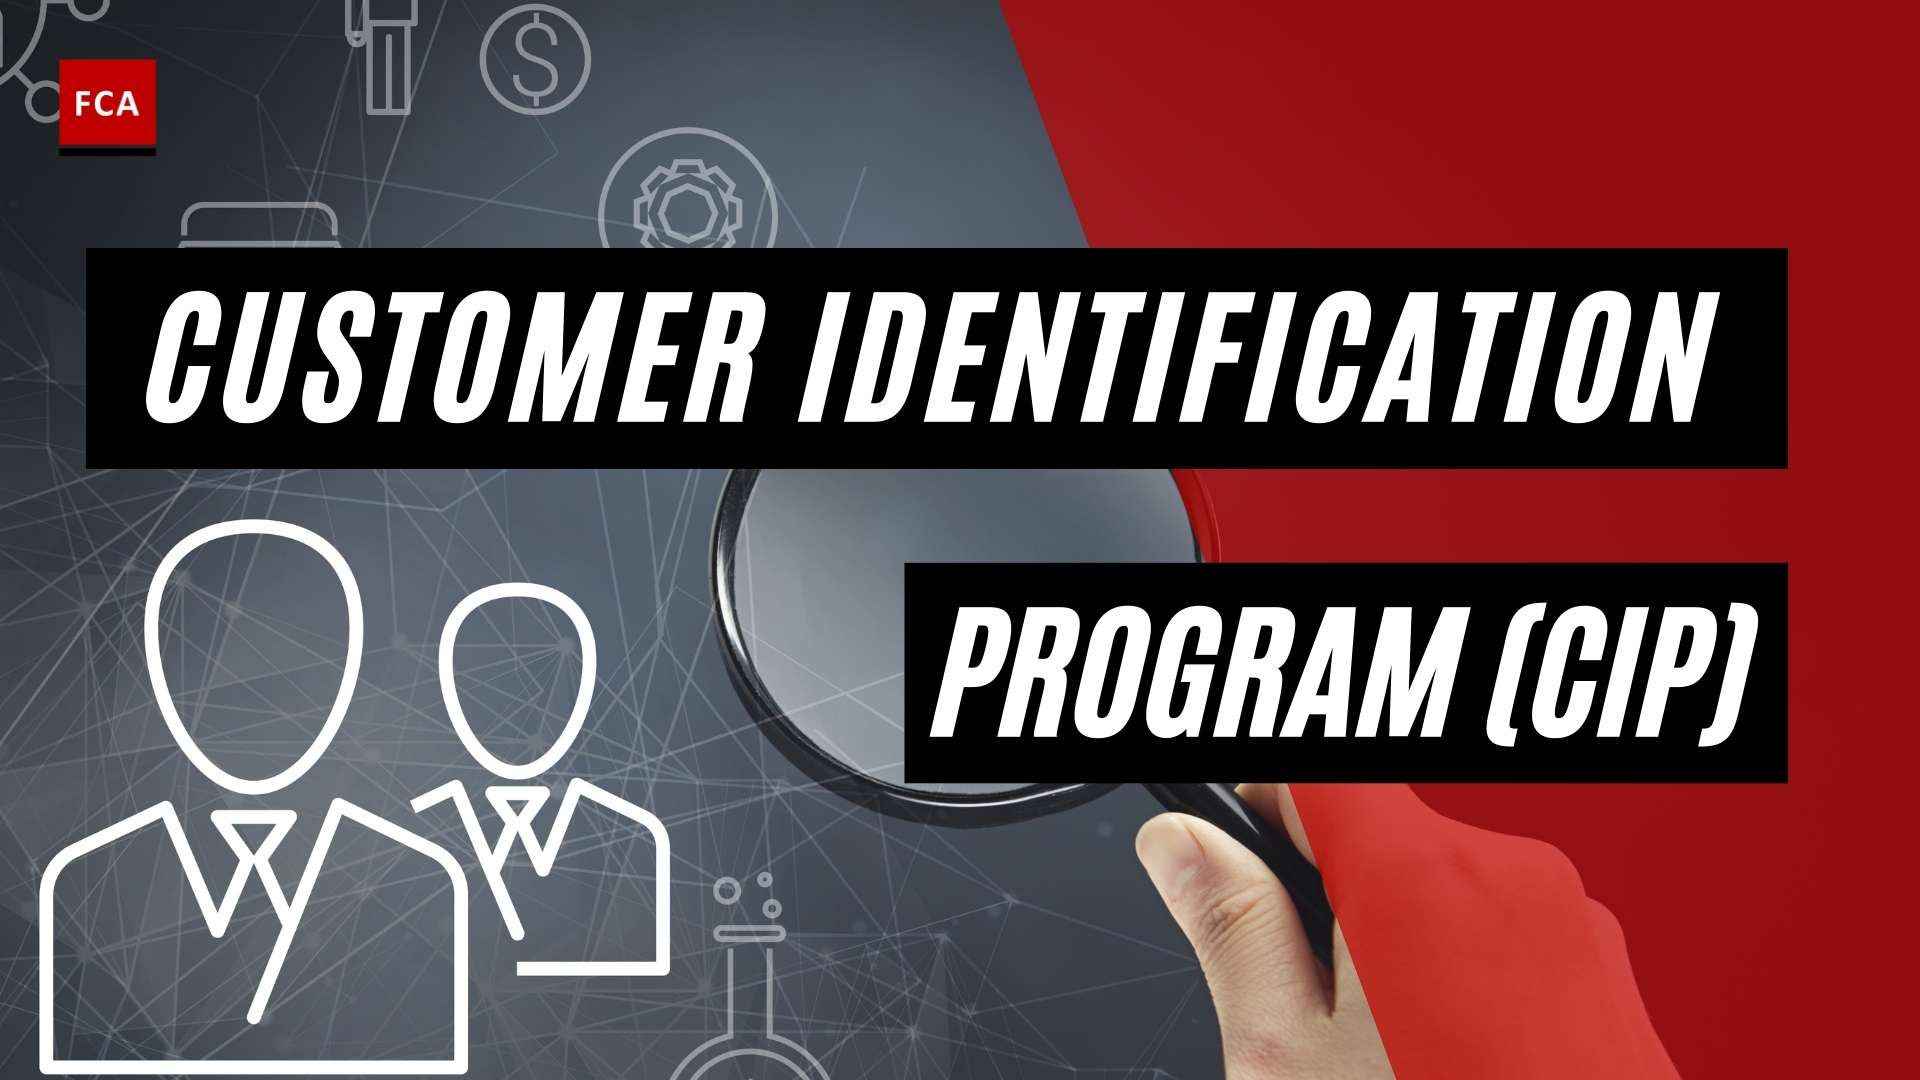 Customer Identification Program - Featured Image